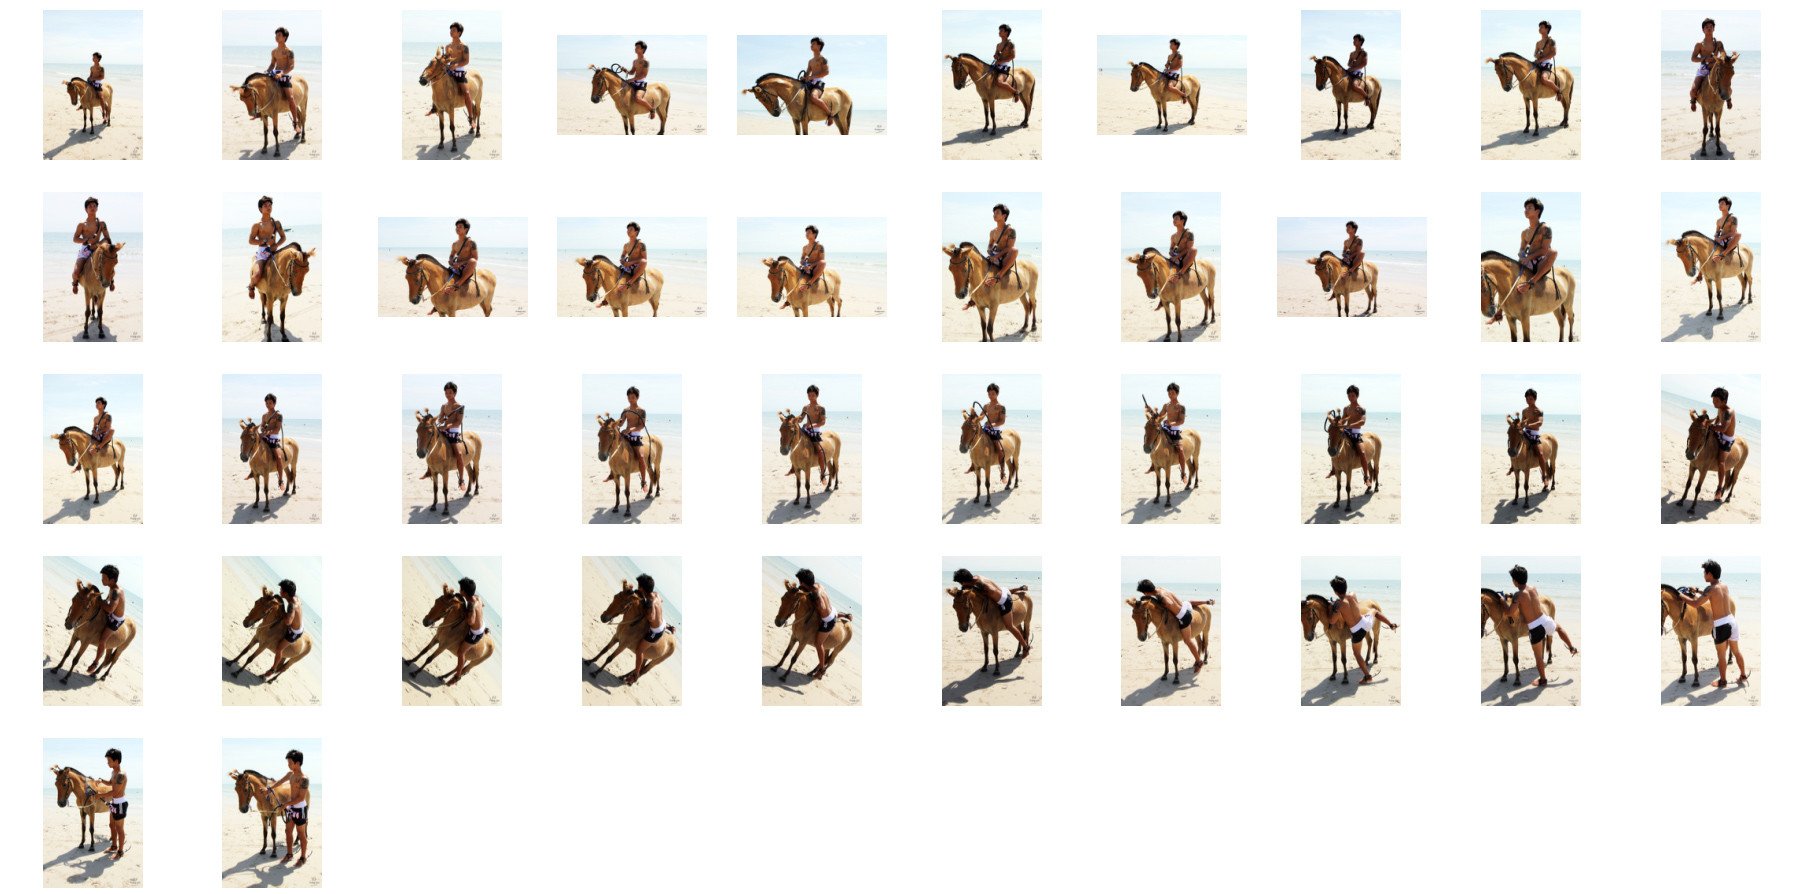 David in Thaibox Shorts Riding Bareback on Golden Pony, Part 3 - Riding.Vision